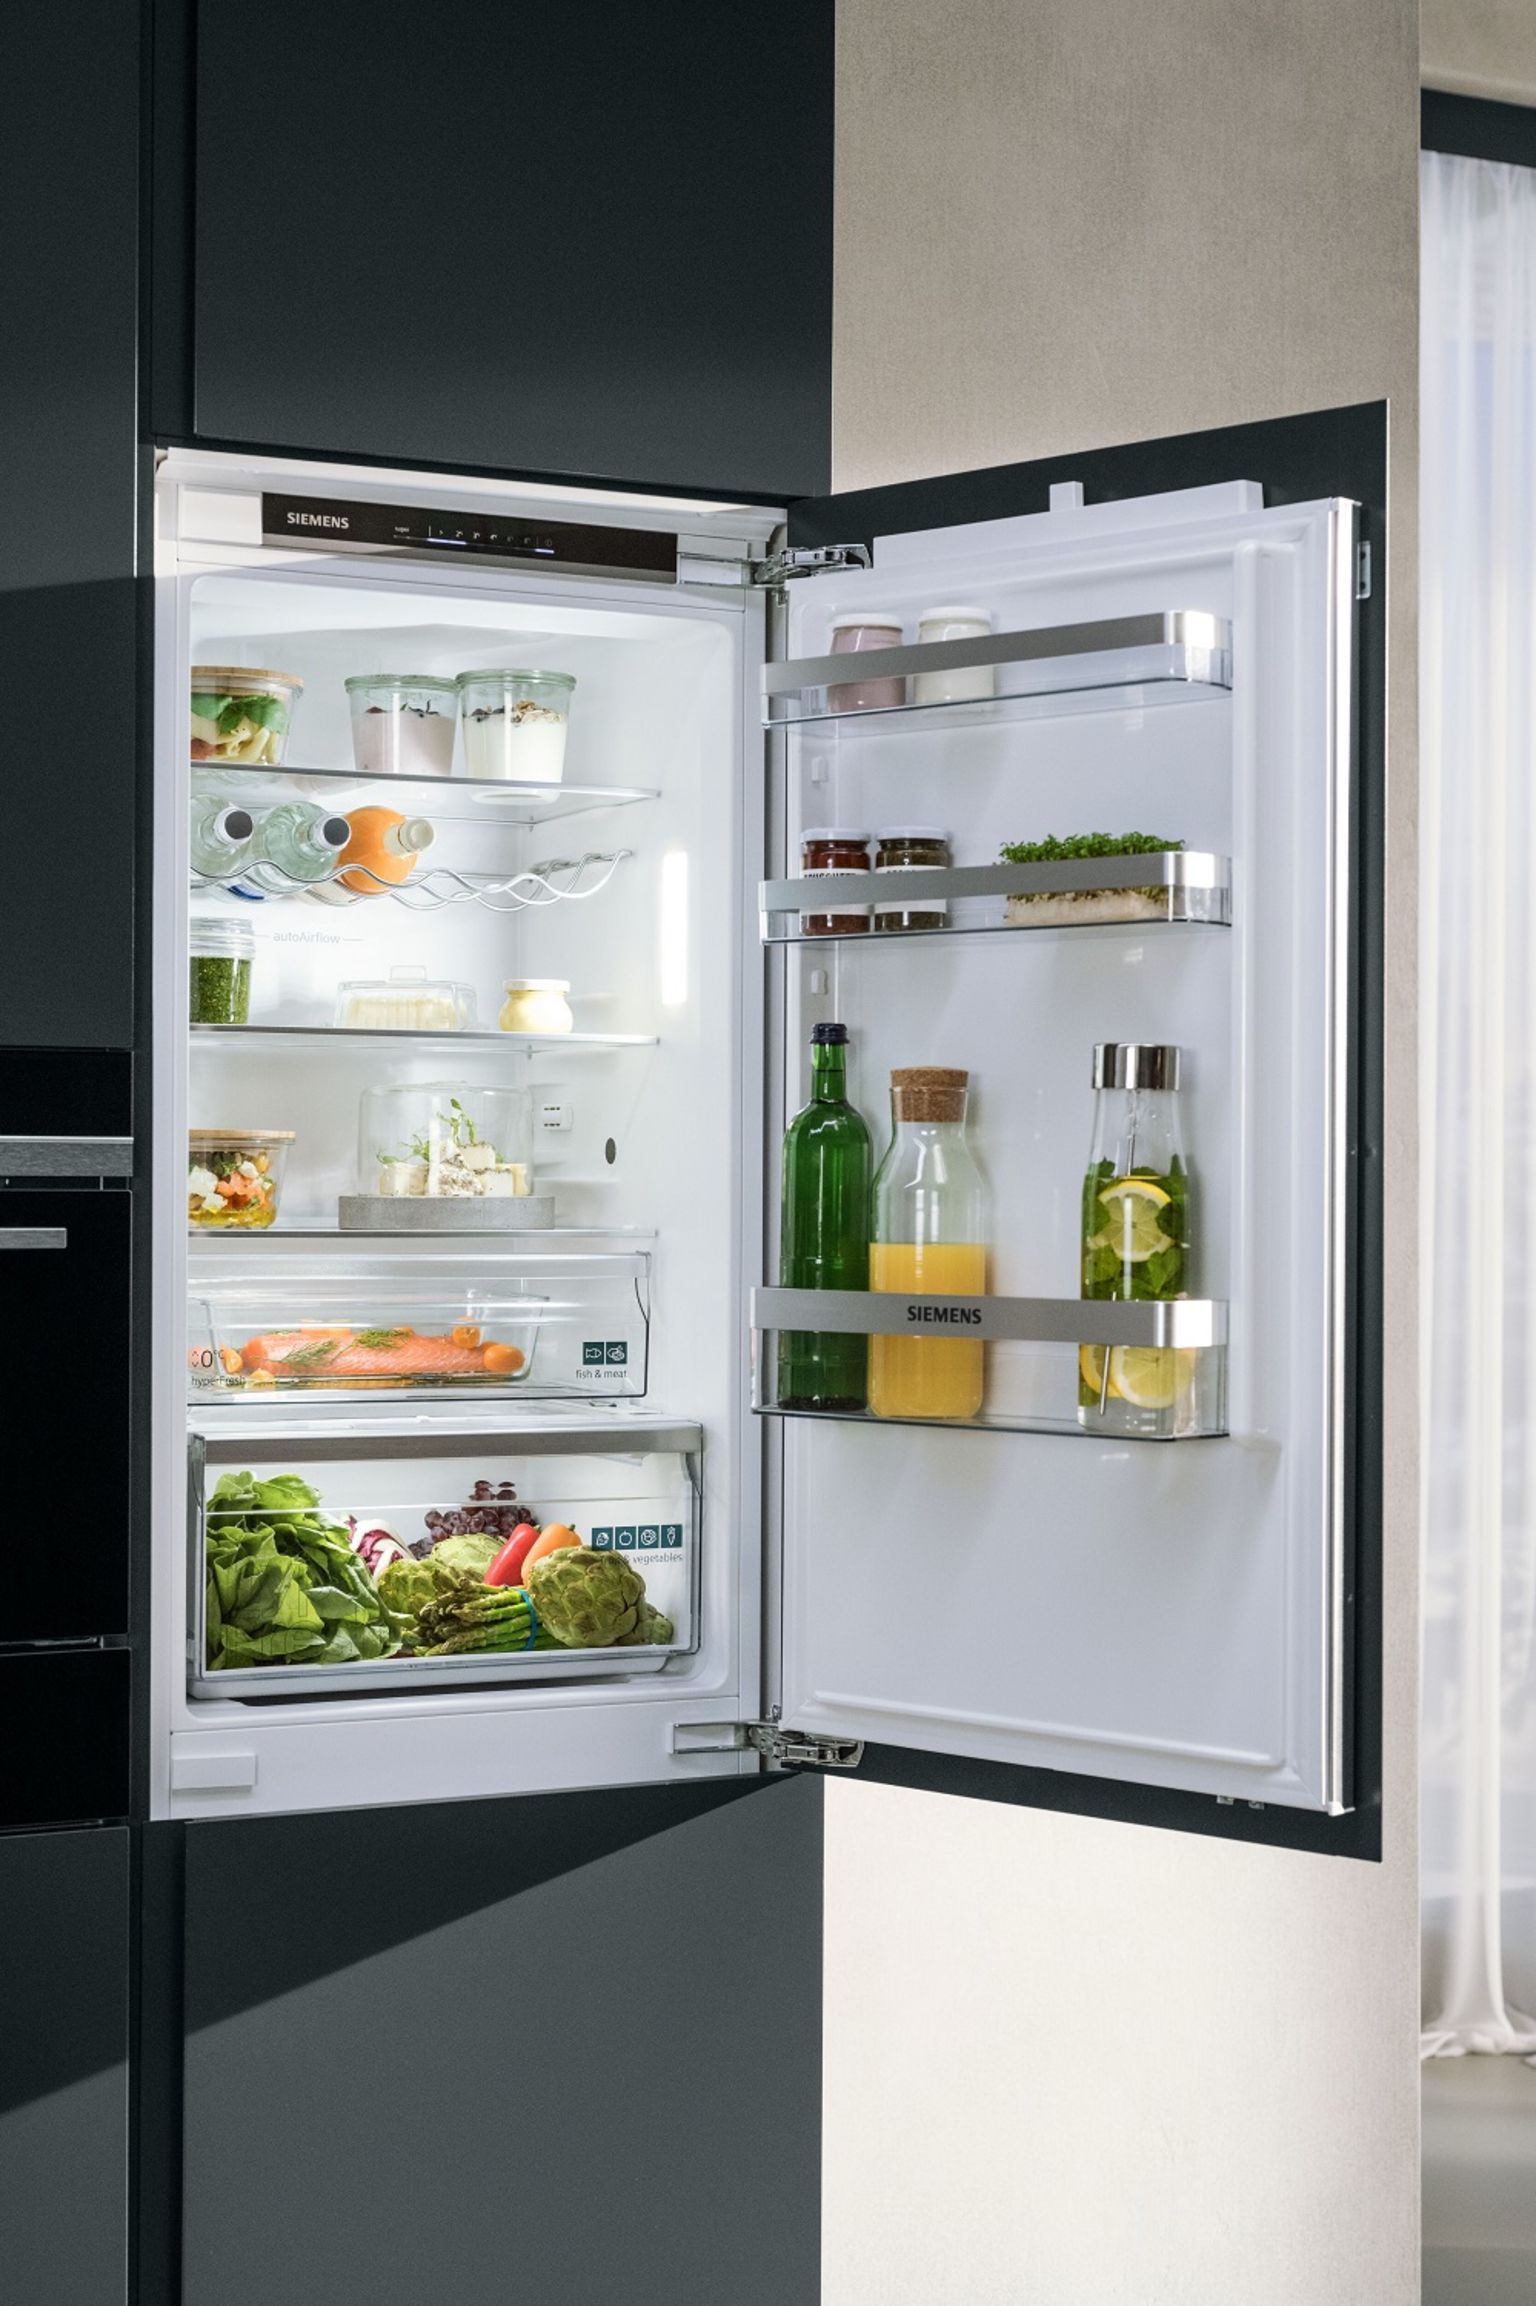 Siemens iQ300 Built-in noFrost fridge-freezer